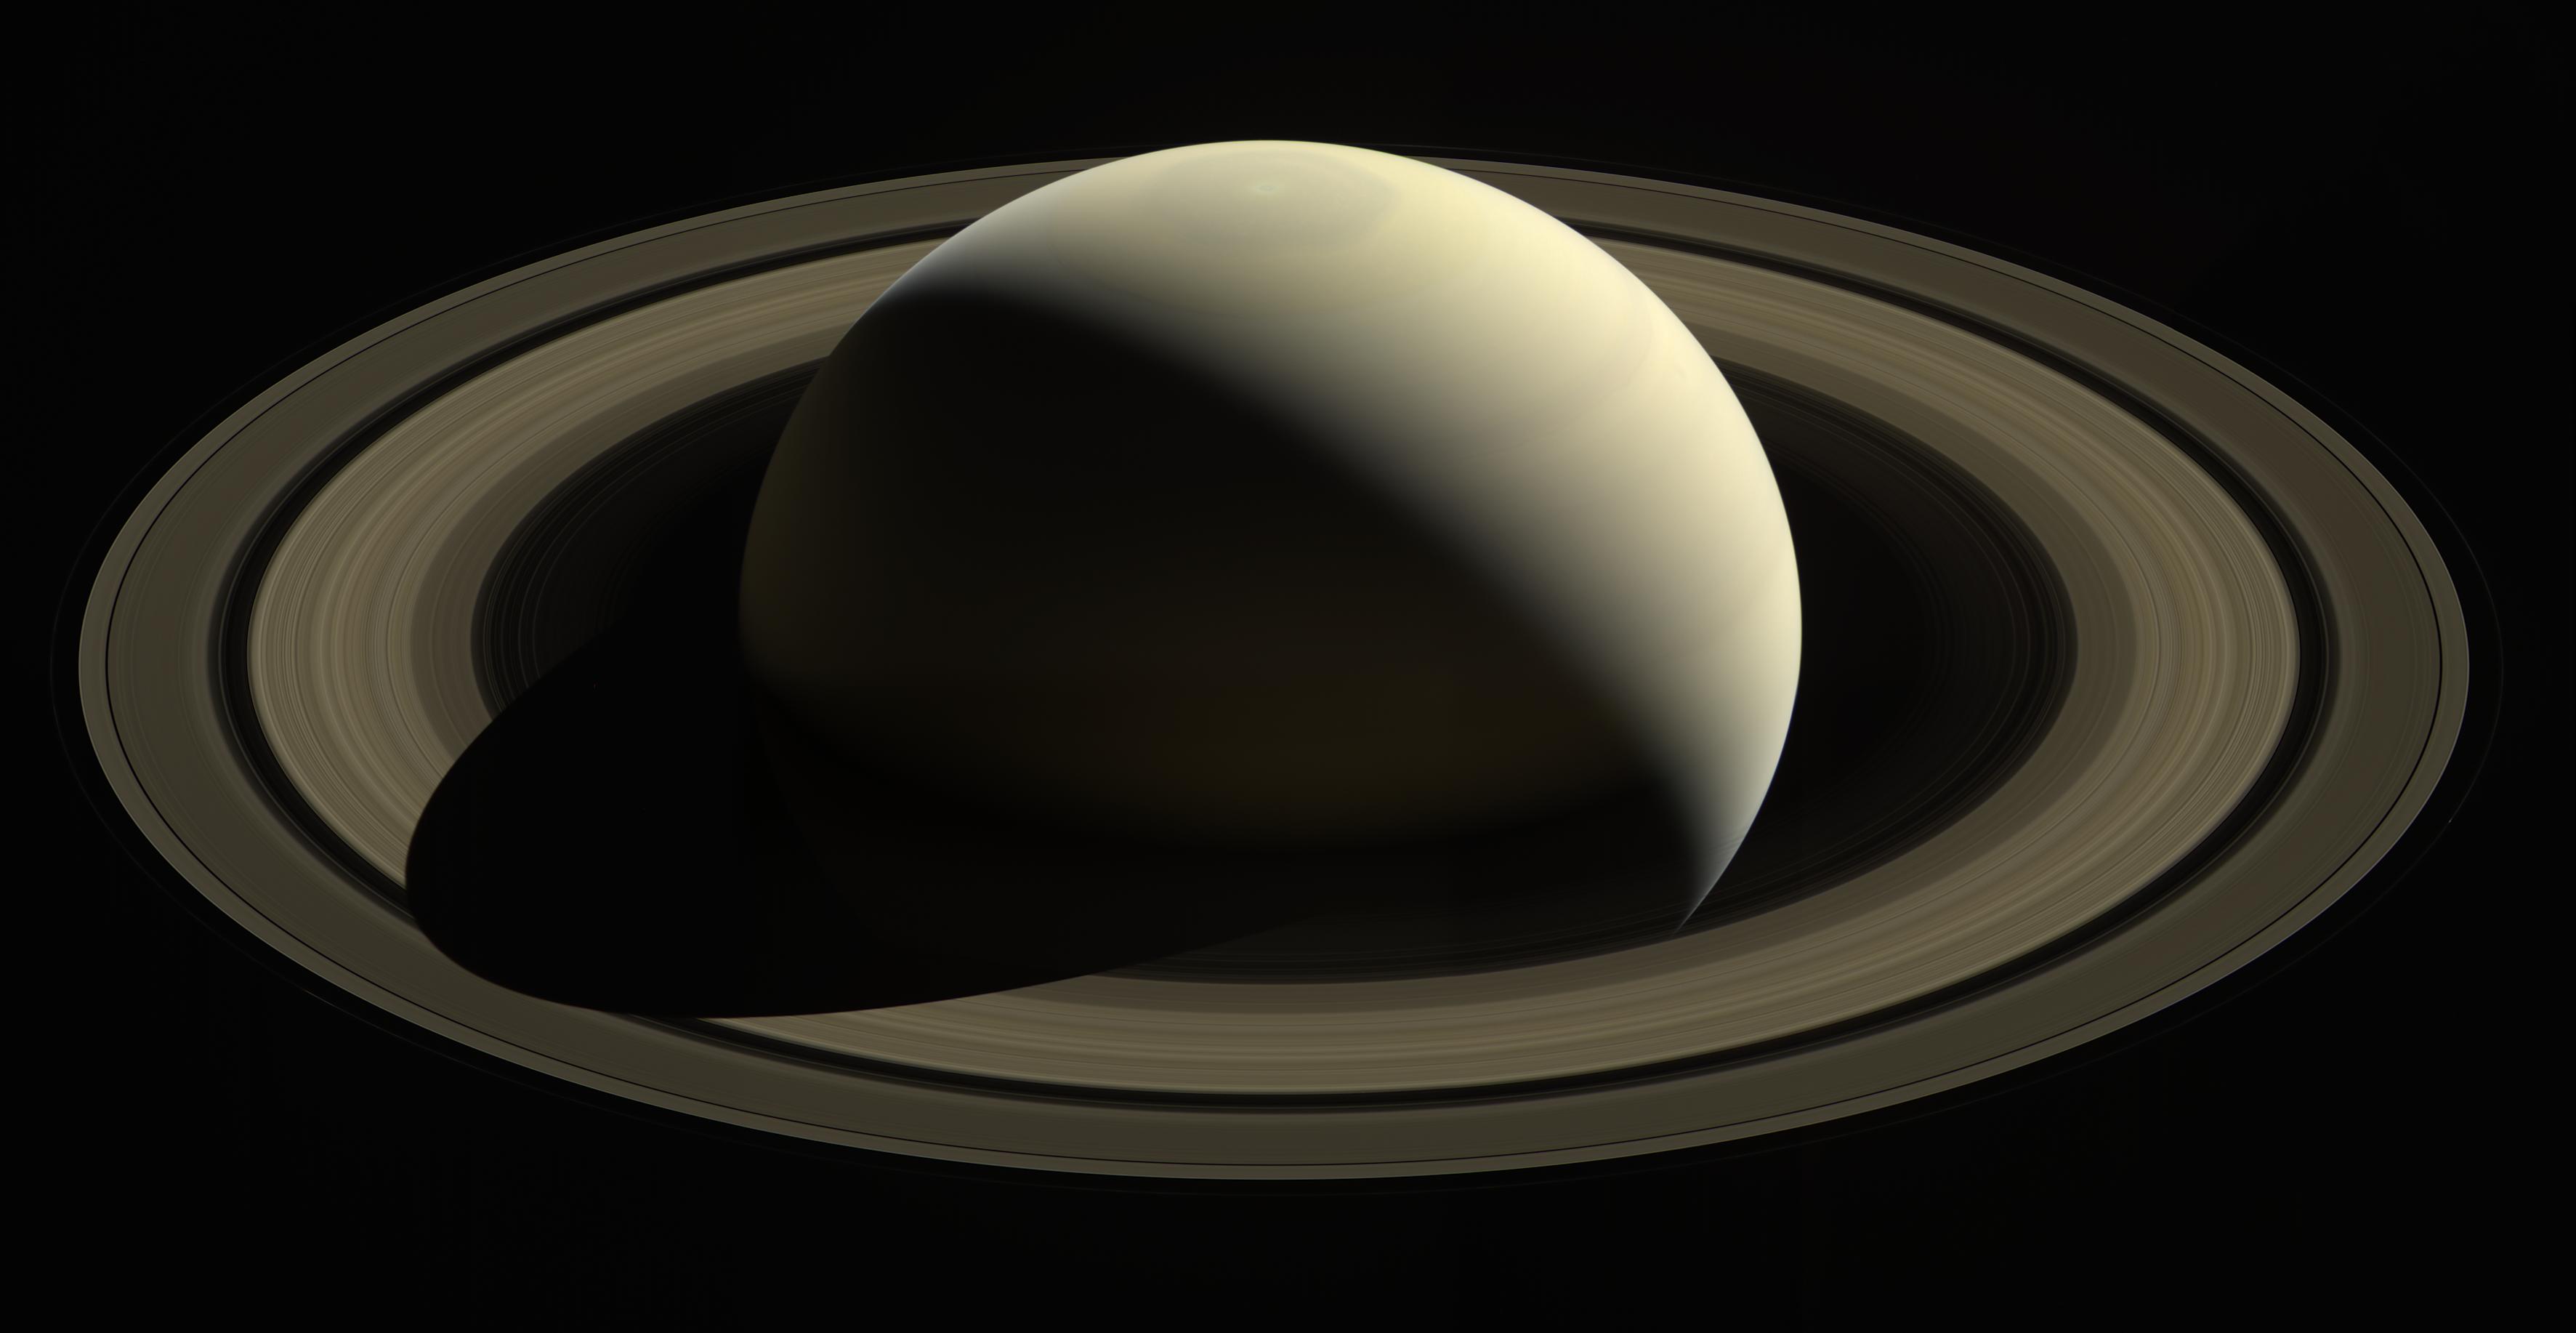 Saturno. NASA/JPL-Caltech/Space Science Institute.